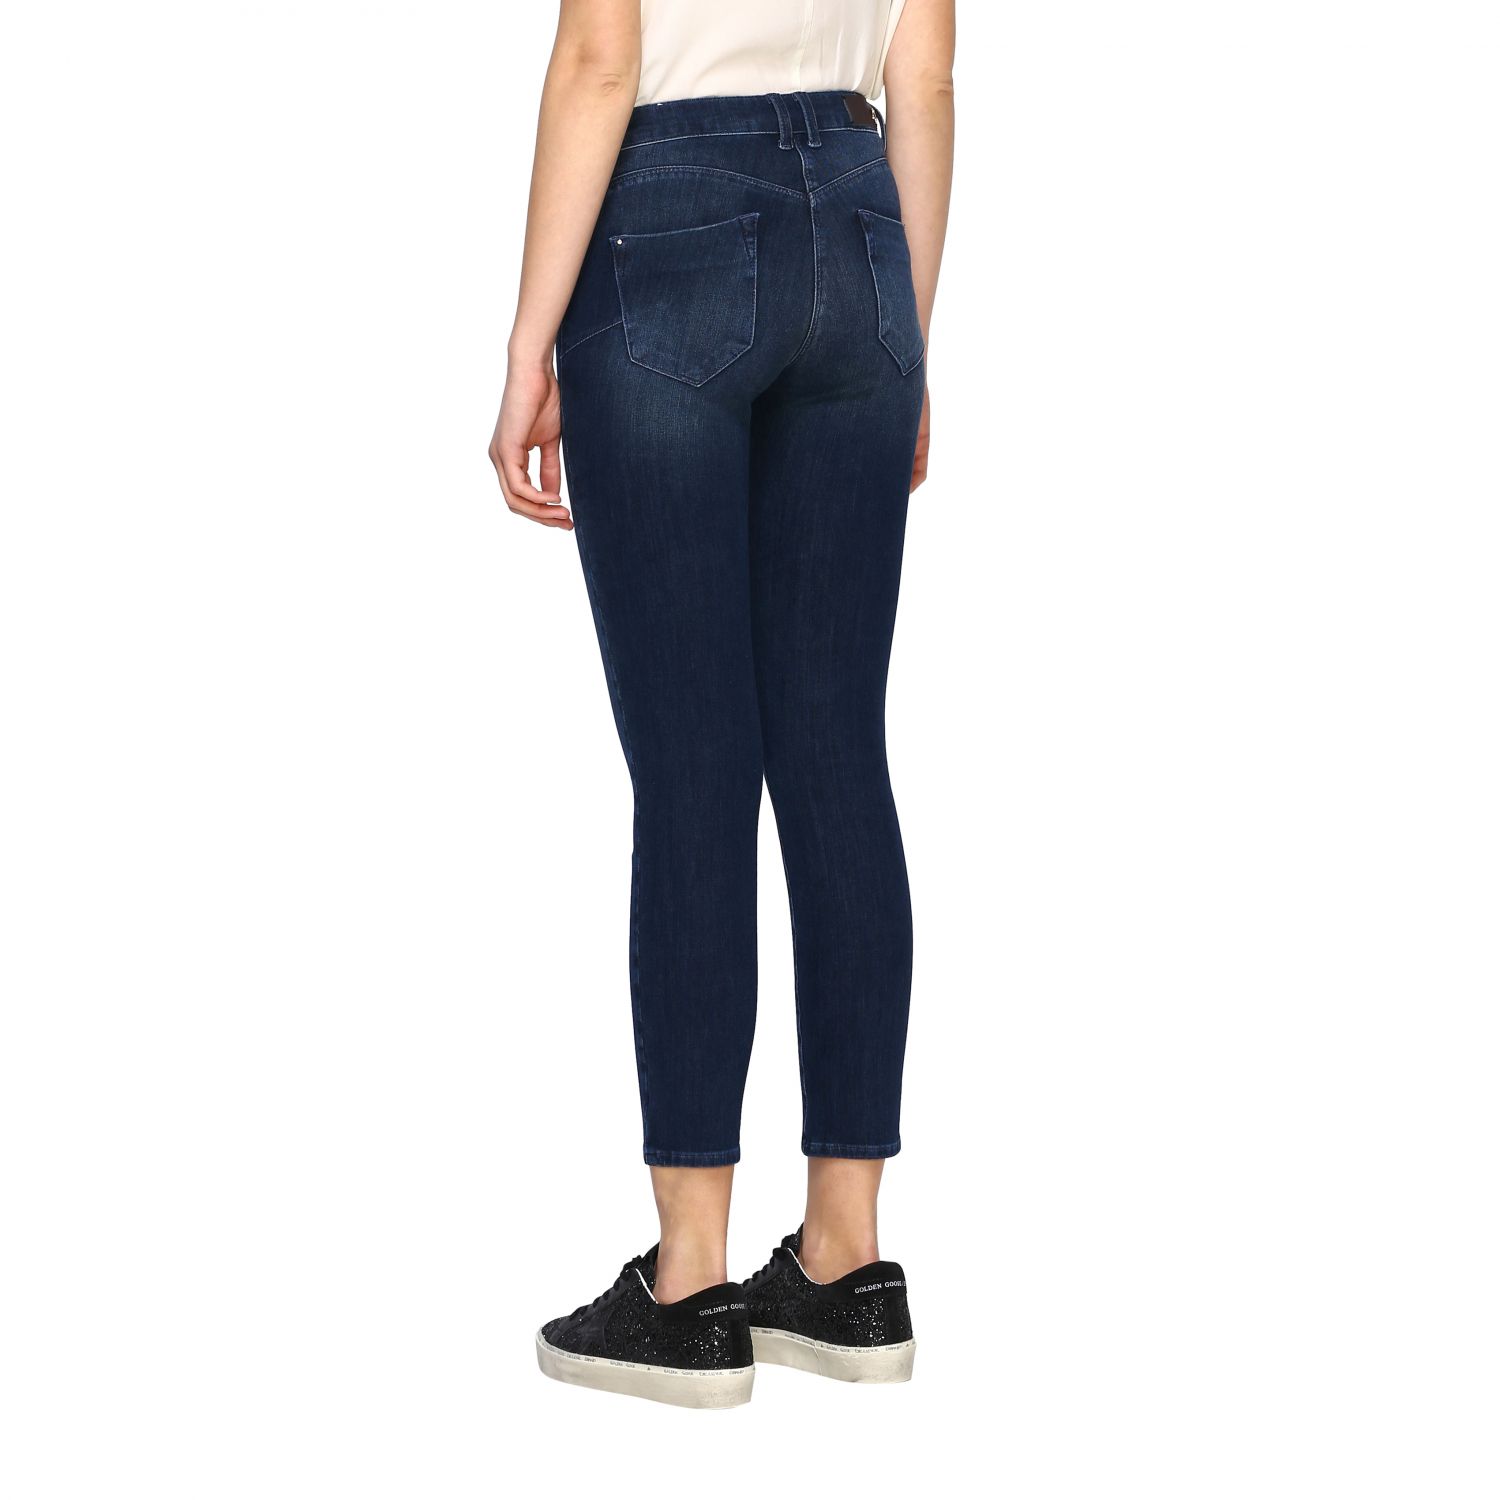 Patrizia Pepe Outlet: jeans for women - Denim | Patrizia Pepe jeans ...